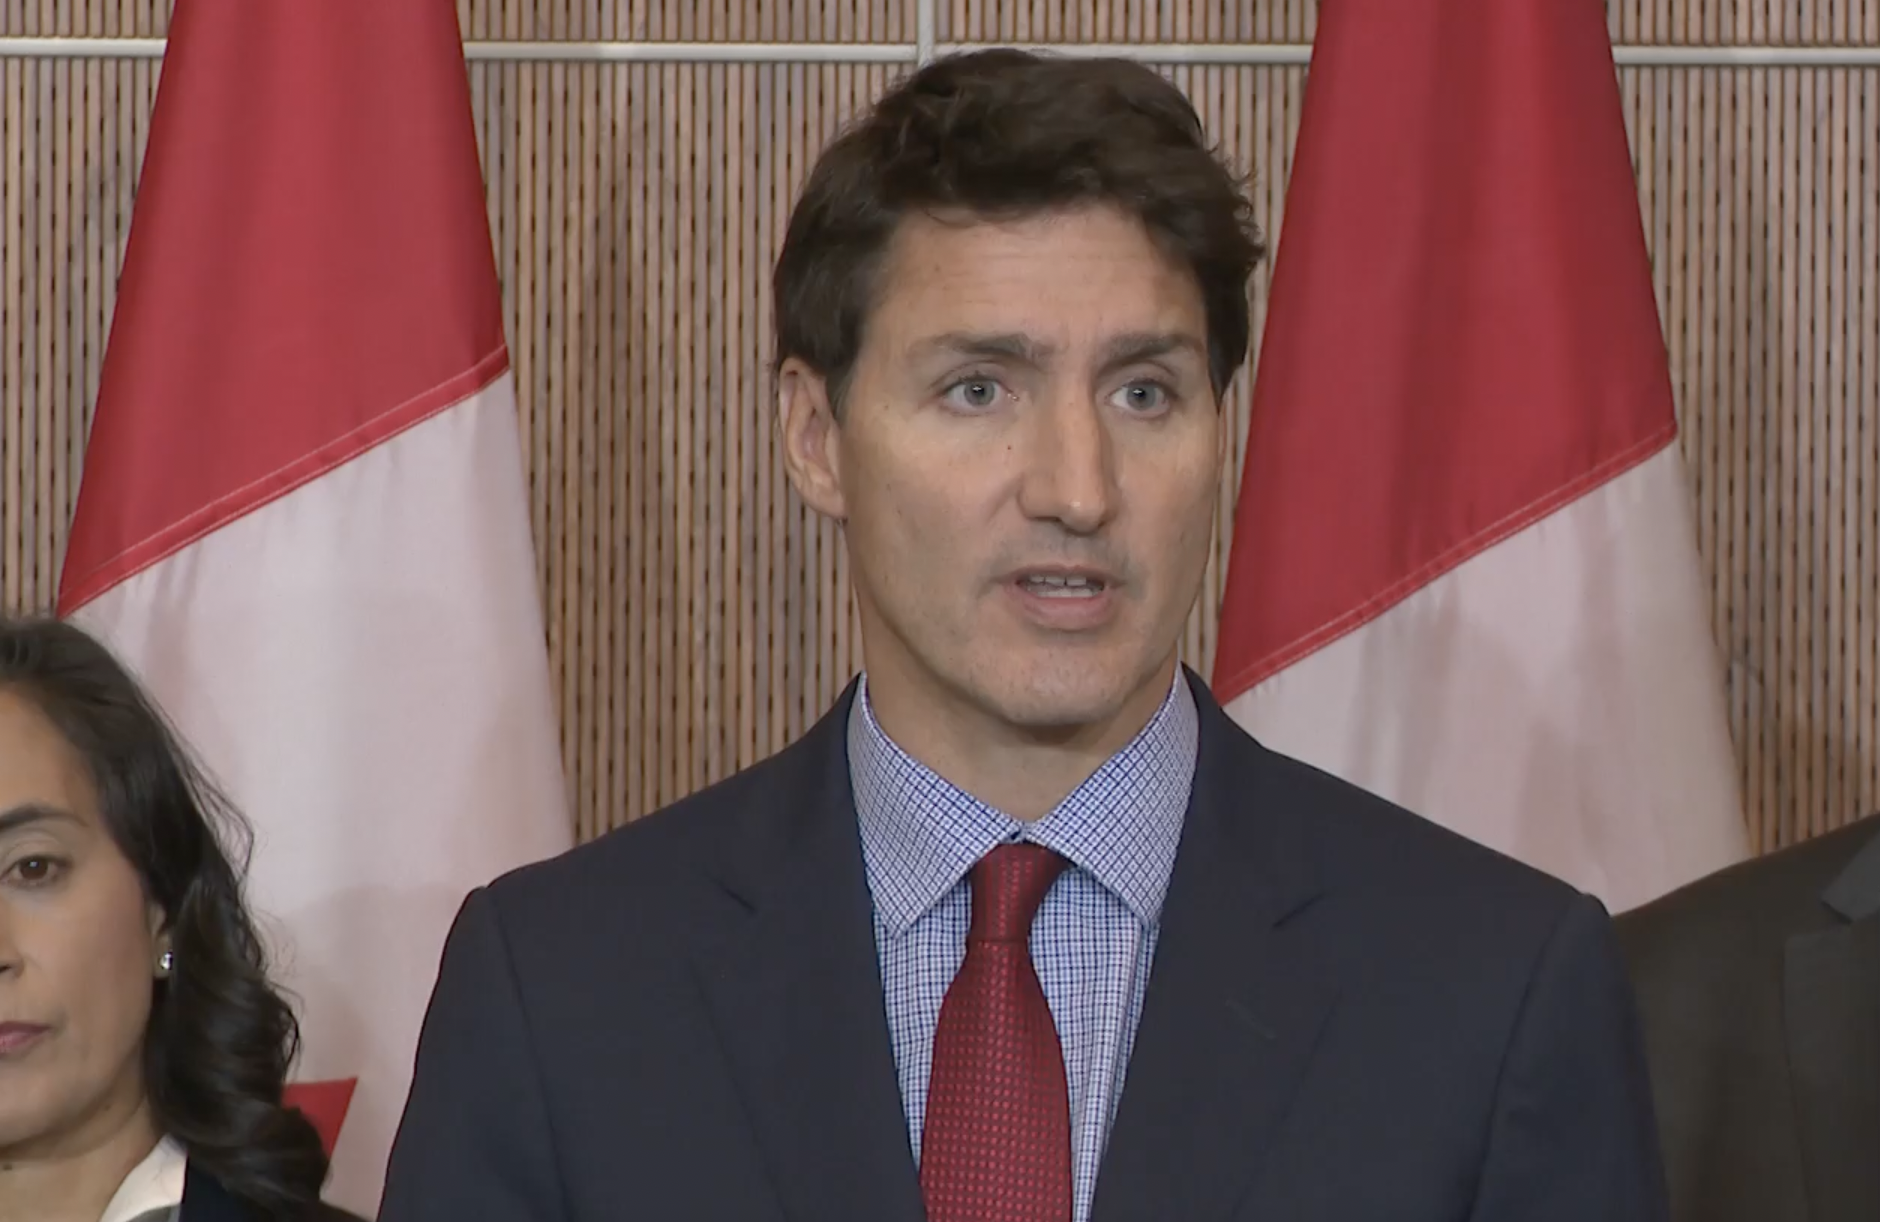 Trudeau’s Private Donation Matching Pledge for Atlantic Canada Criticized